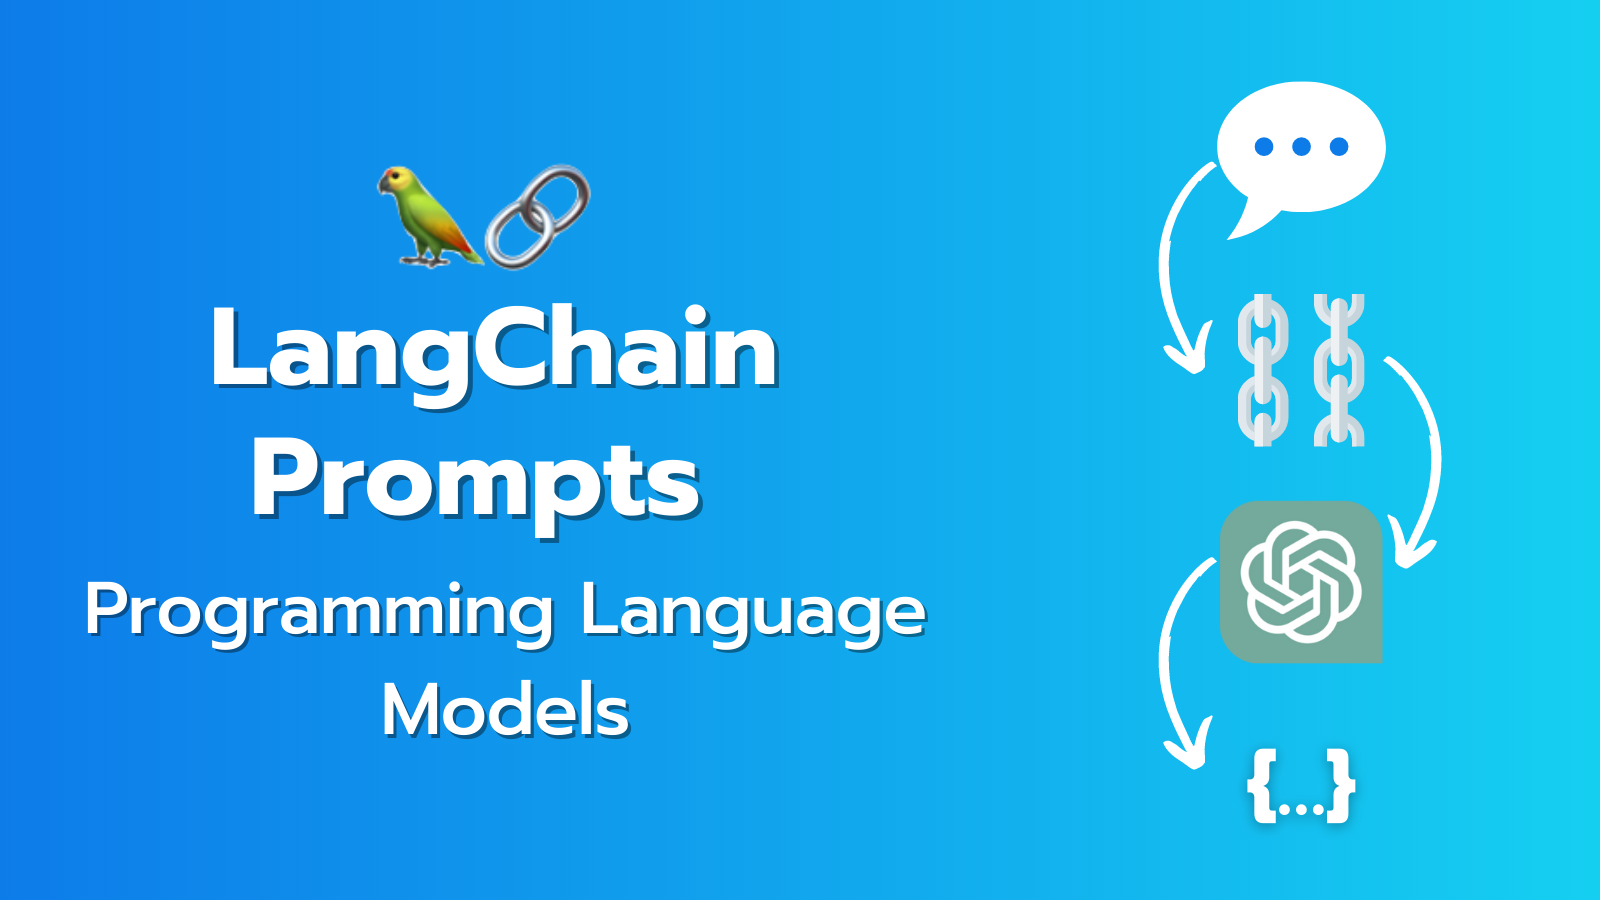 LangChain Prompts Programming Language Models